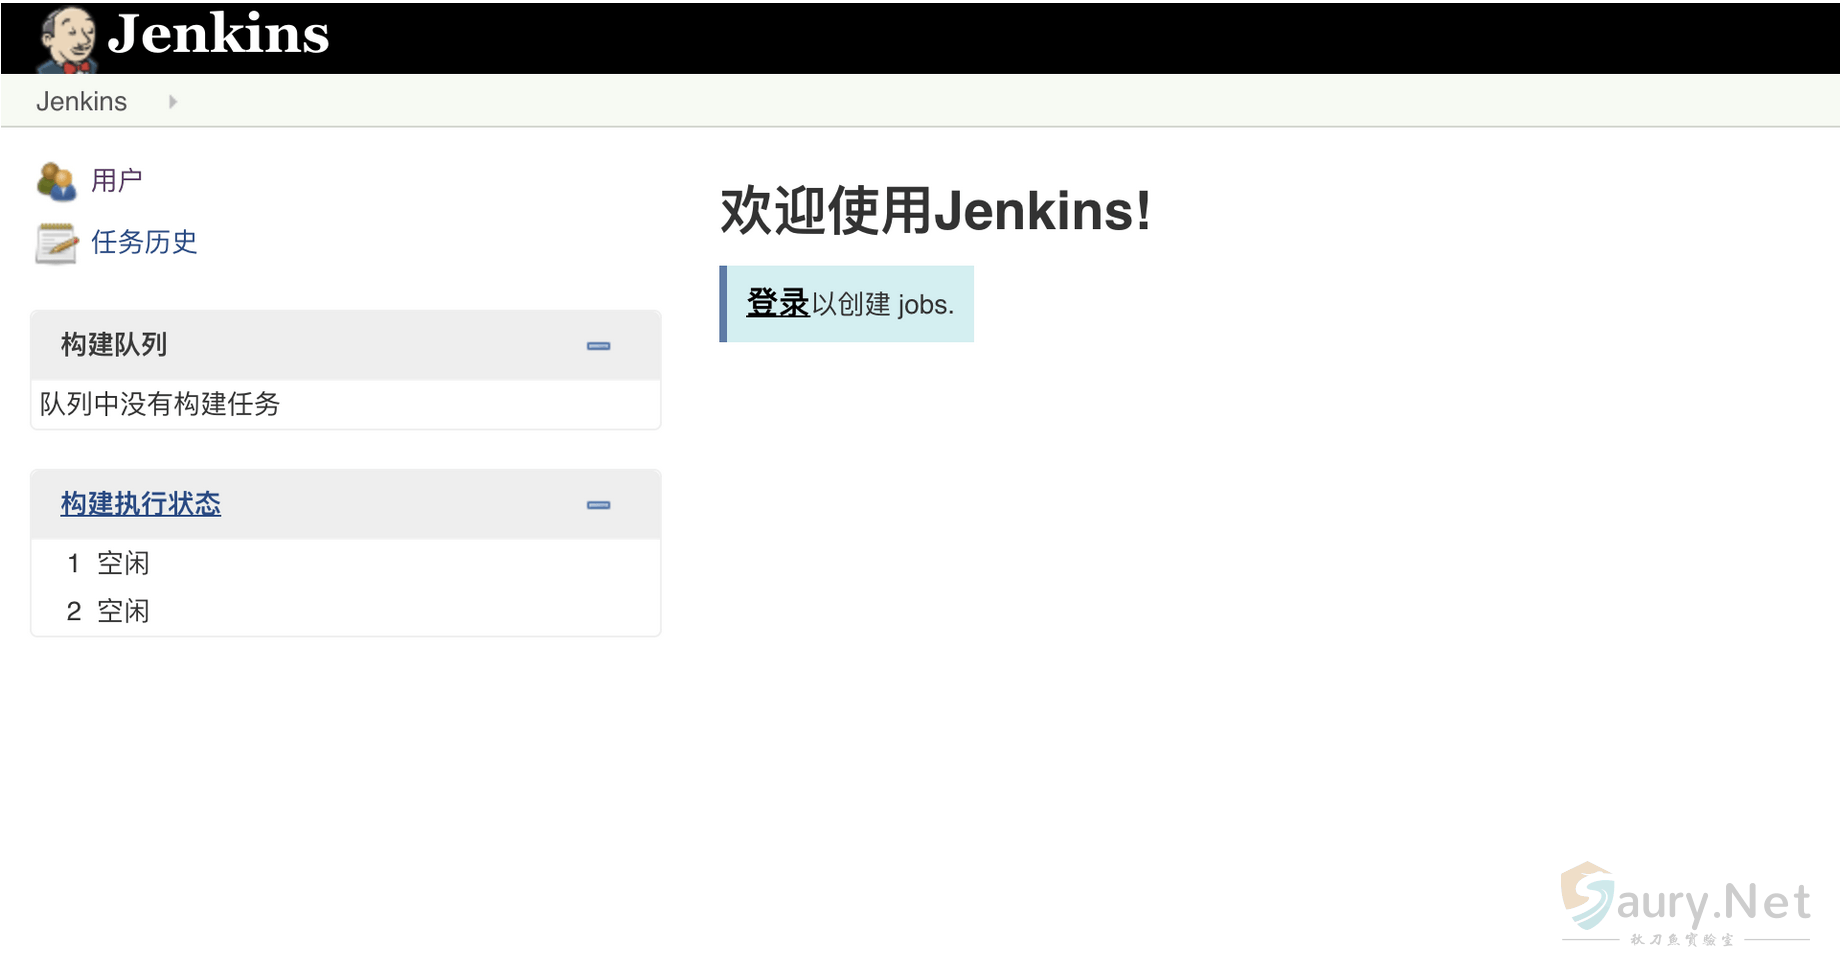 Jenkins checkScript远程命令执行漏洞 #CVE-2018-1000861-秋刀鱼实验室